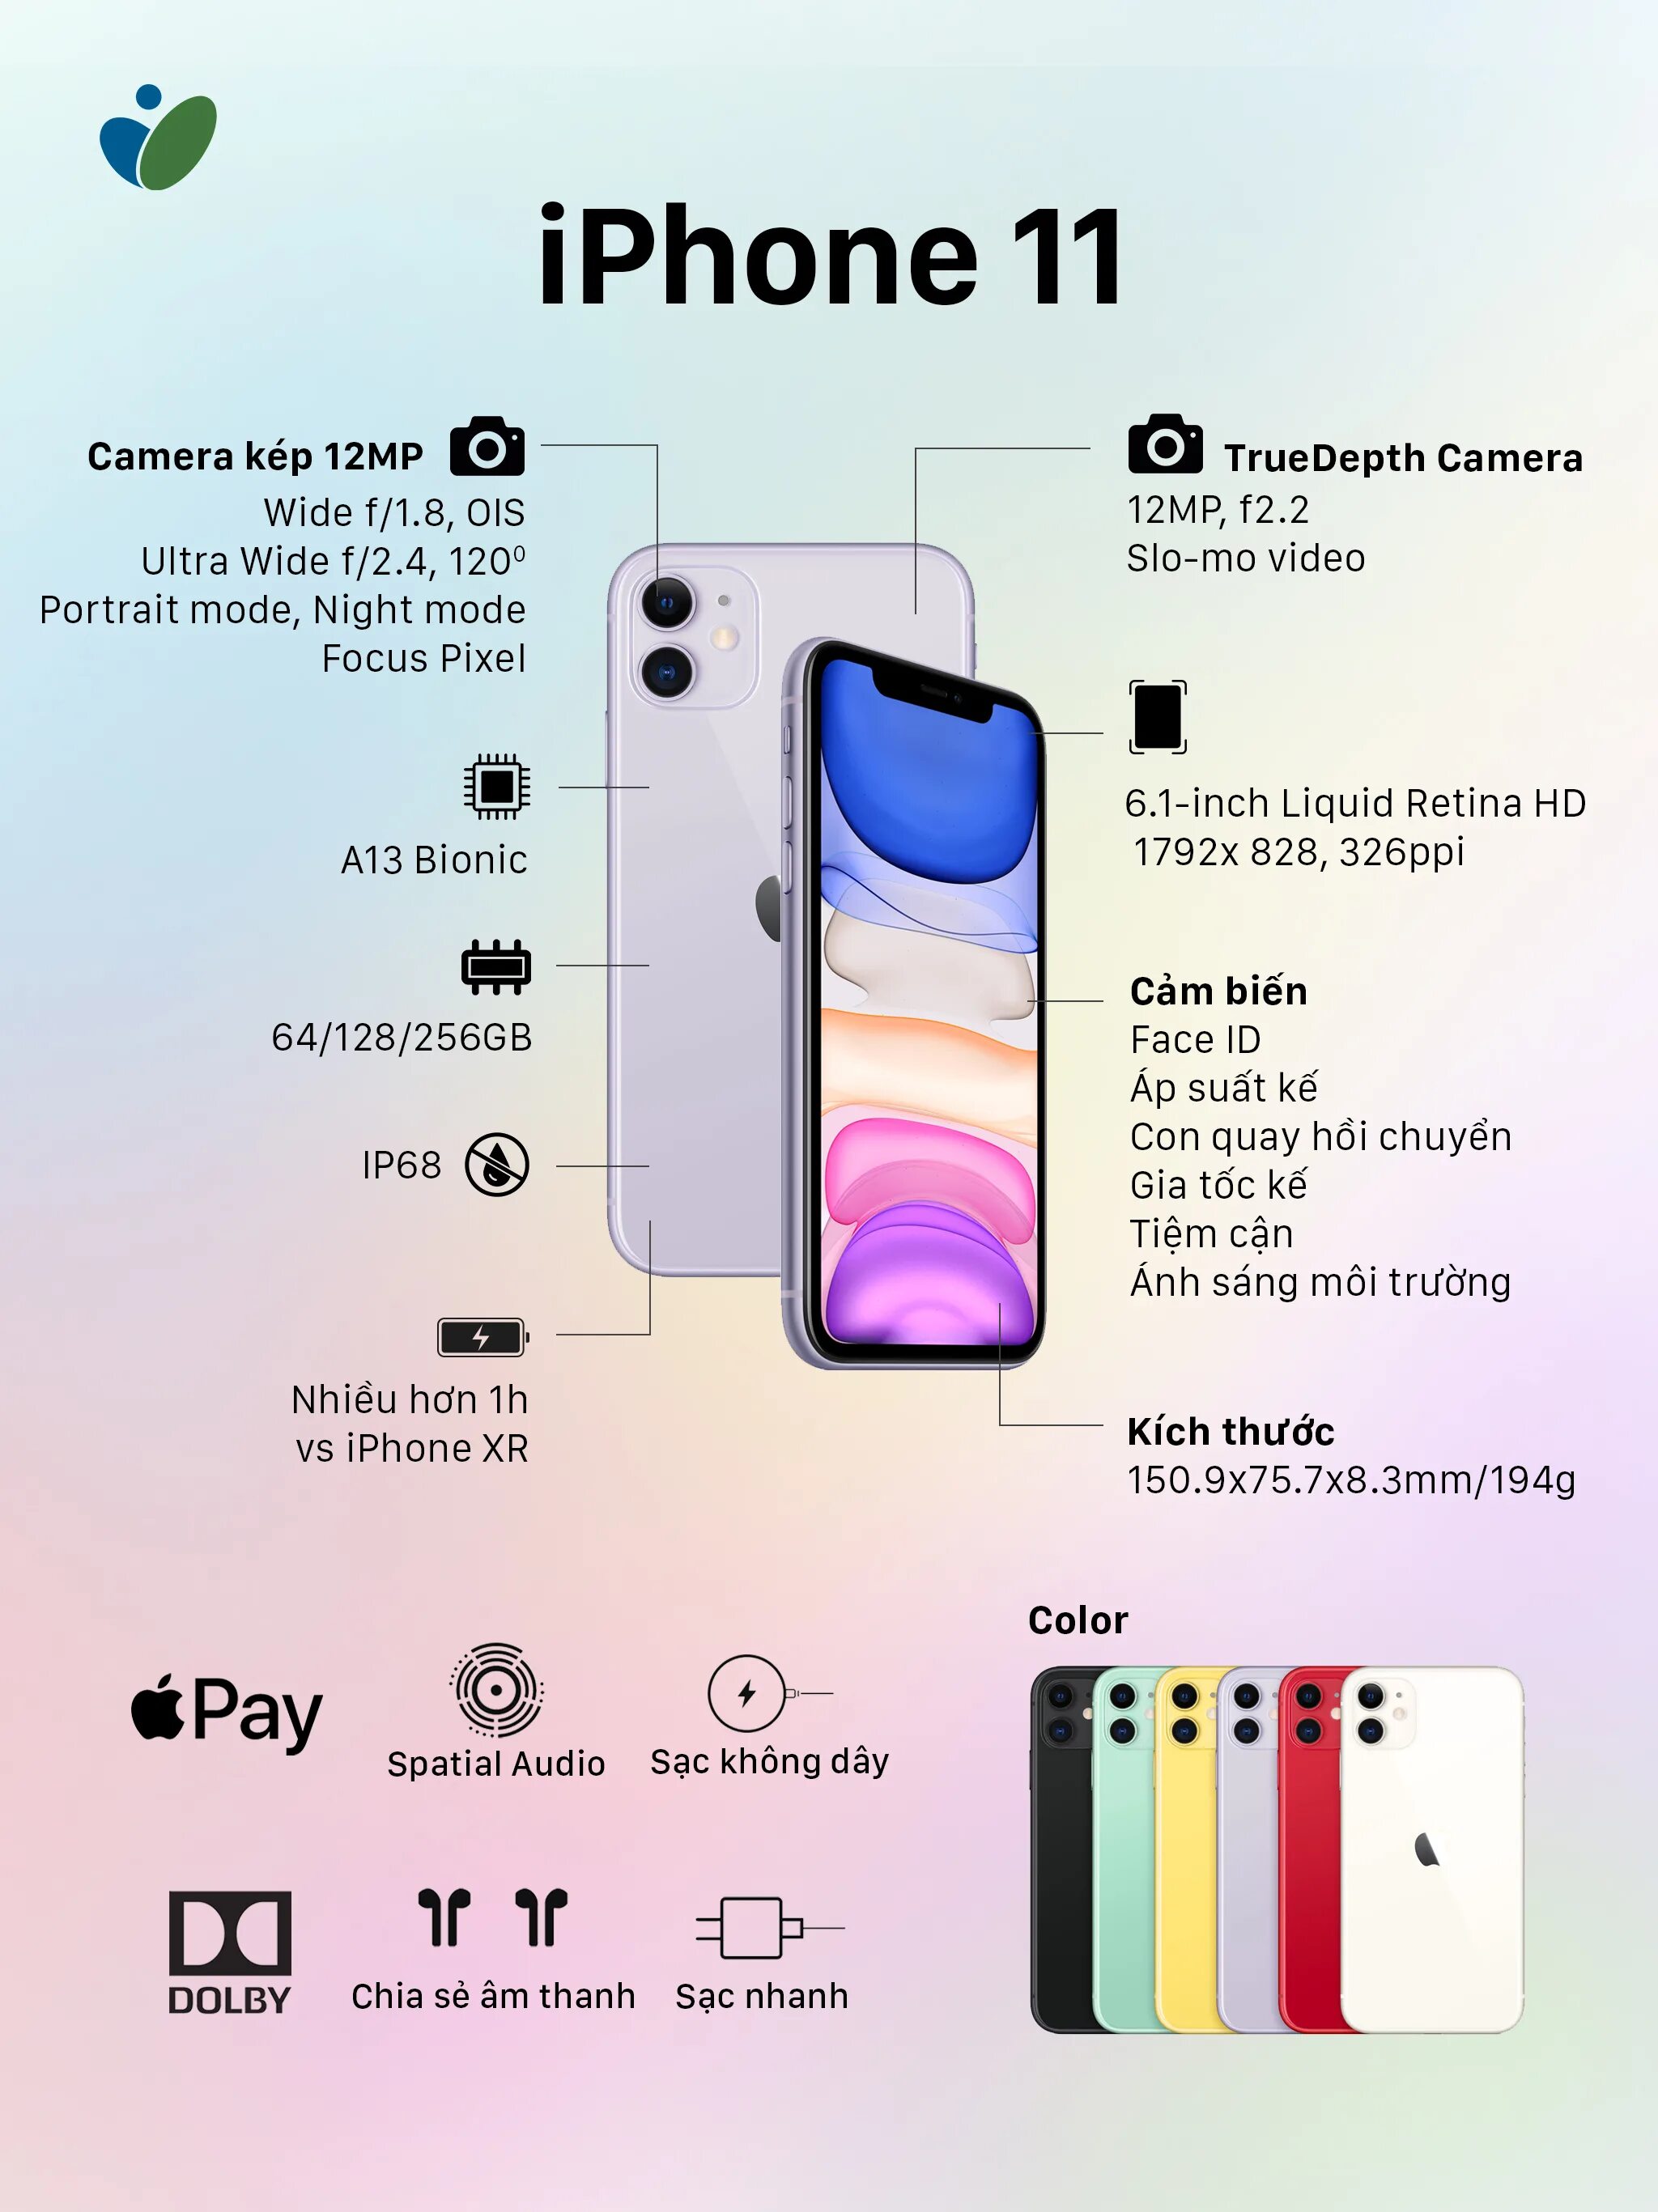 11 про сколько памяти. Айфон 11 Pro Max камера мегапикселей. Айфон 11 про Макс камера МП. Iphone 11 камера мегапикселей. Айфон 11 характеристики камеры.